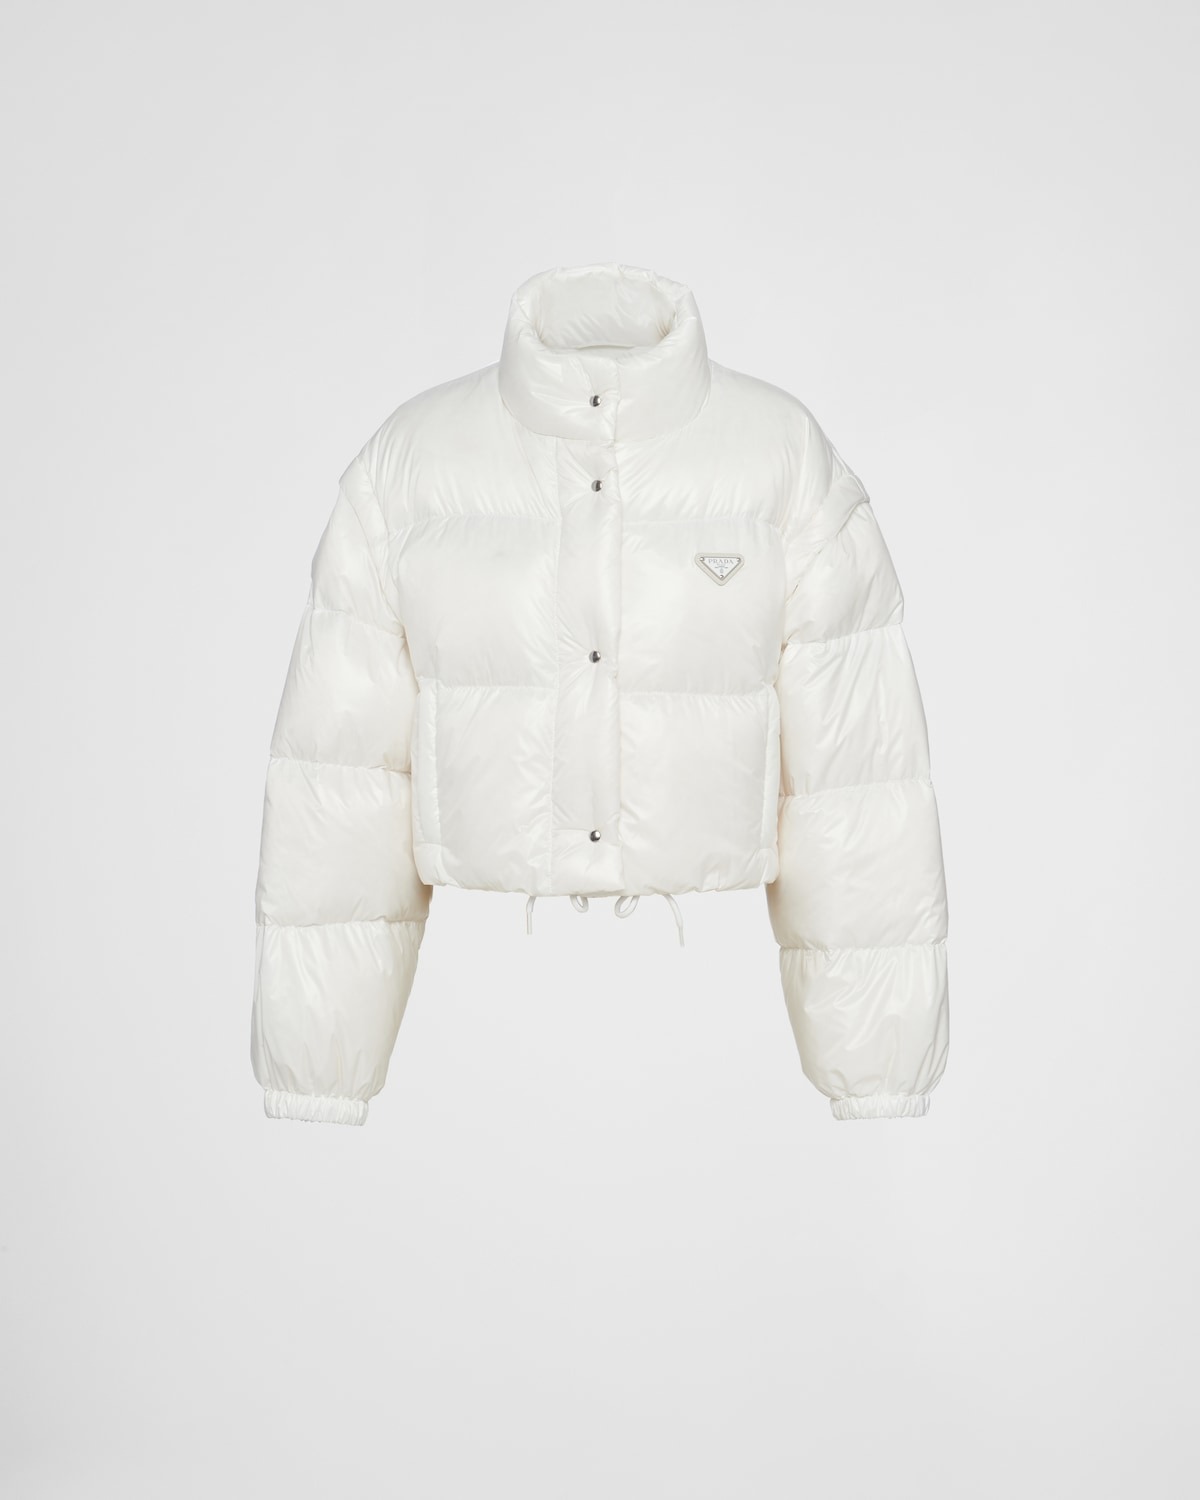 Prada + Re-Nylon Cropped Convertible Down Jacket in White